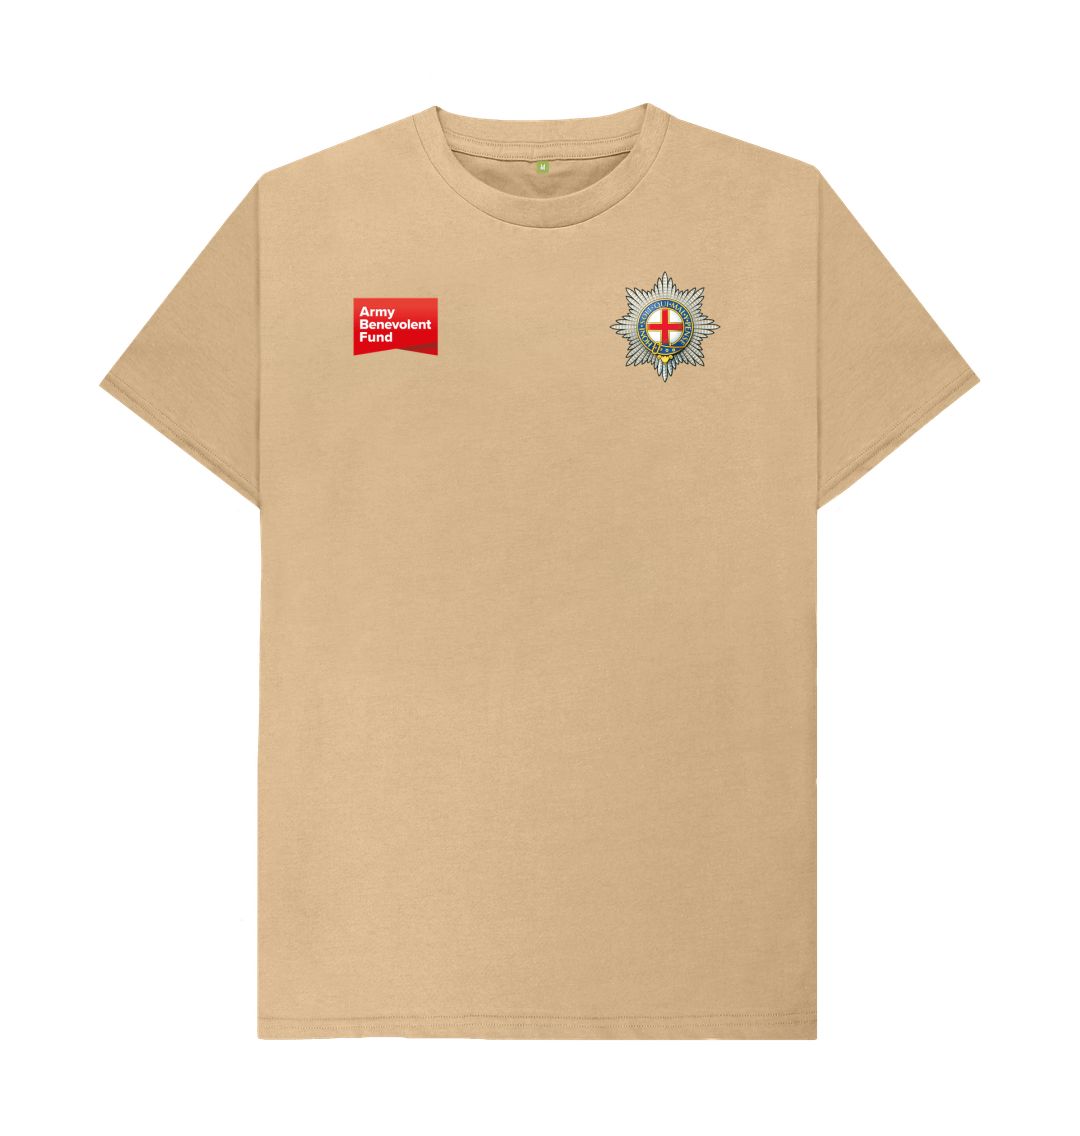 Coldstream Guards Unisex T-shirt - Army Benevolent Fund